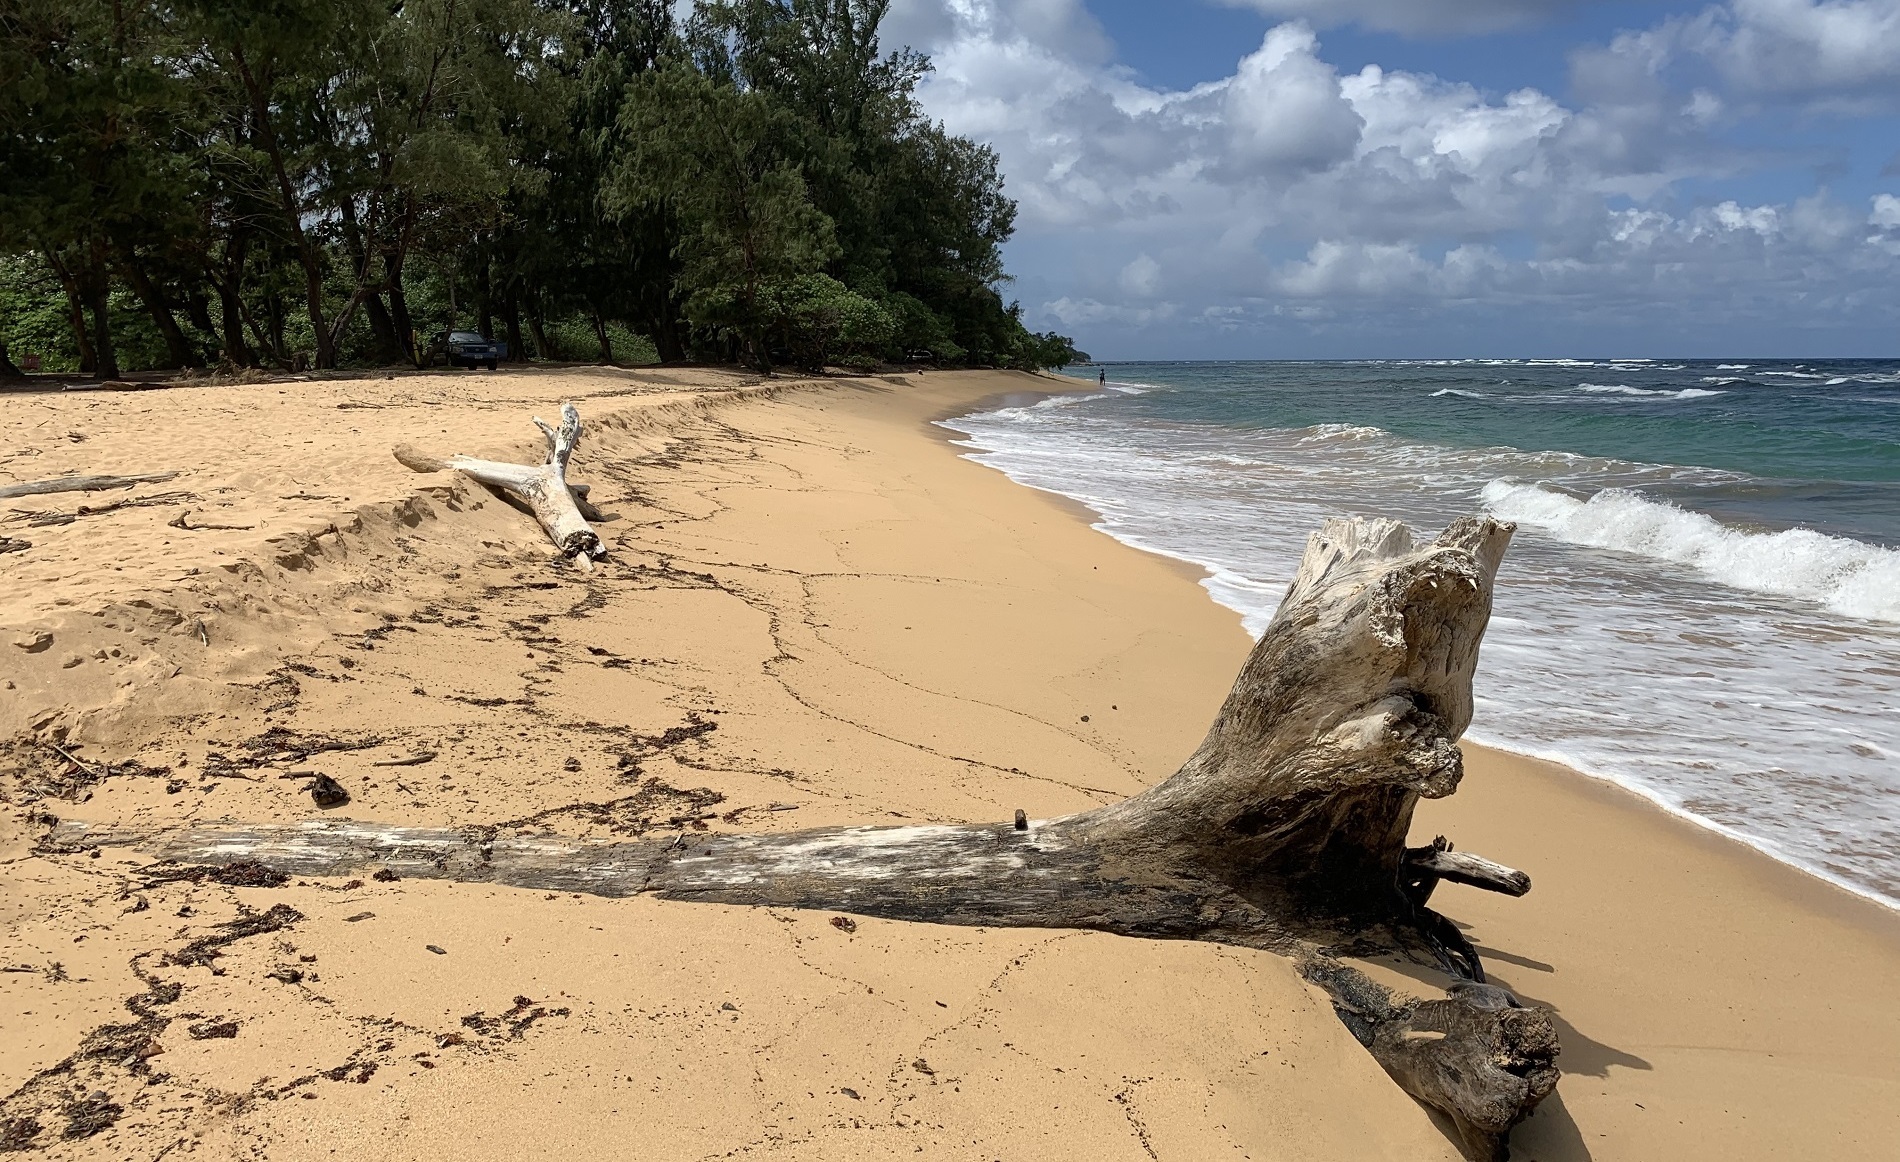 Protect ʻAliomanu Beach Access